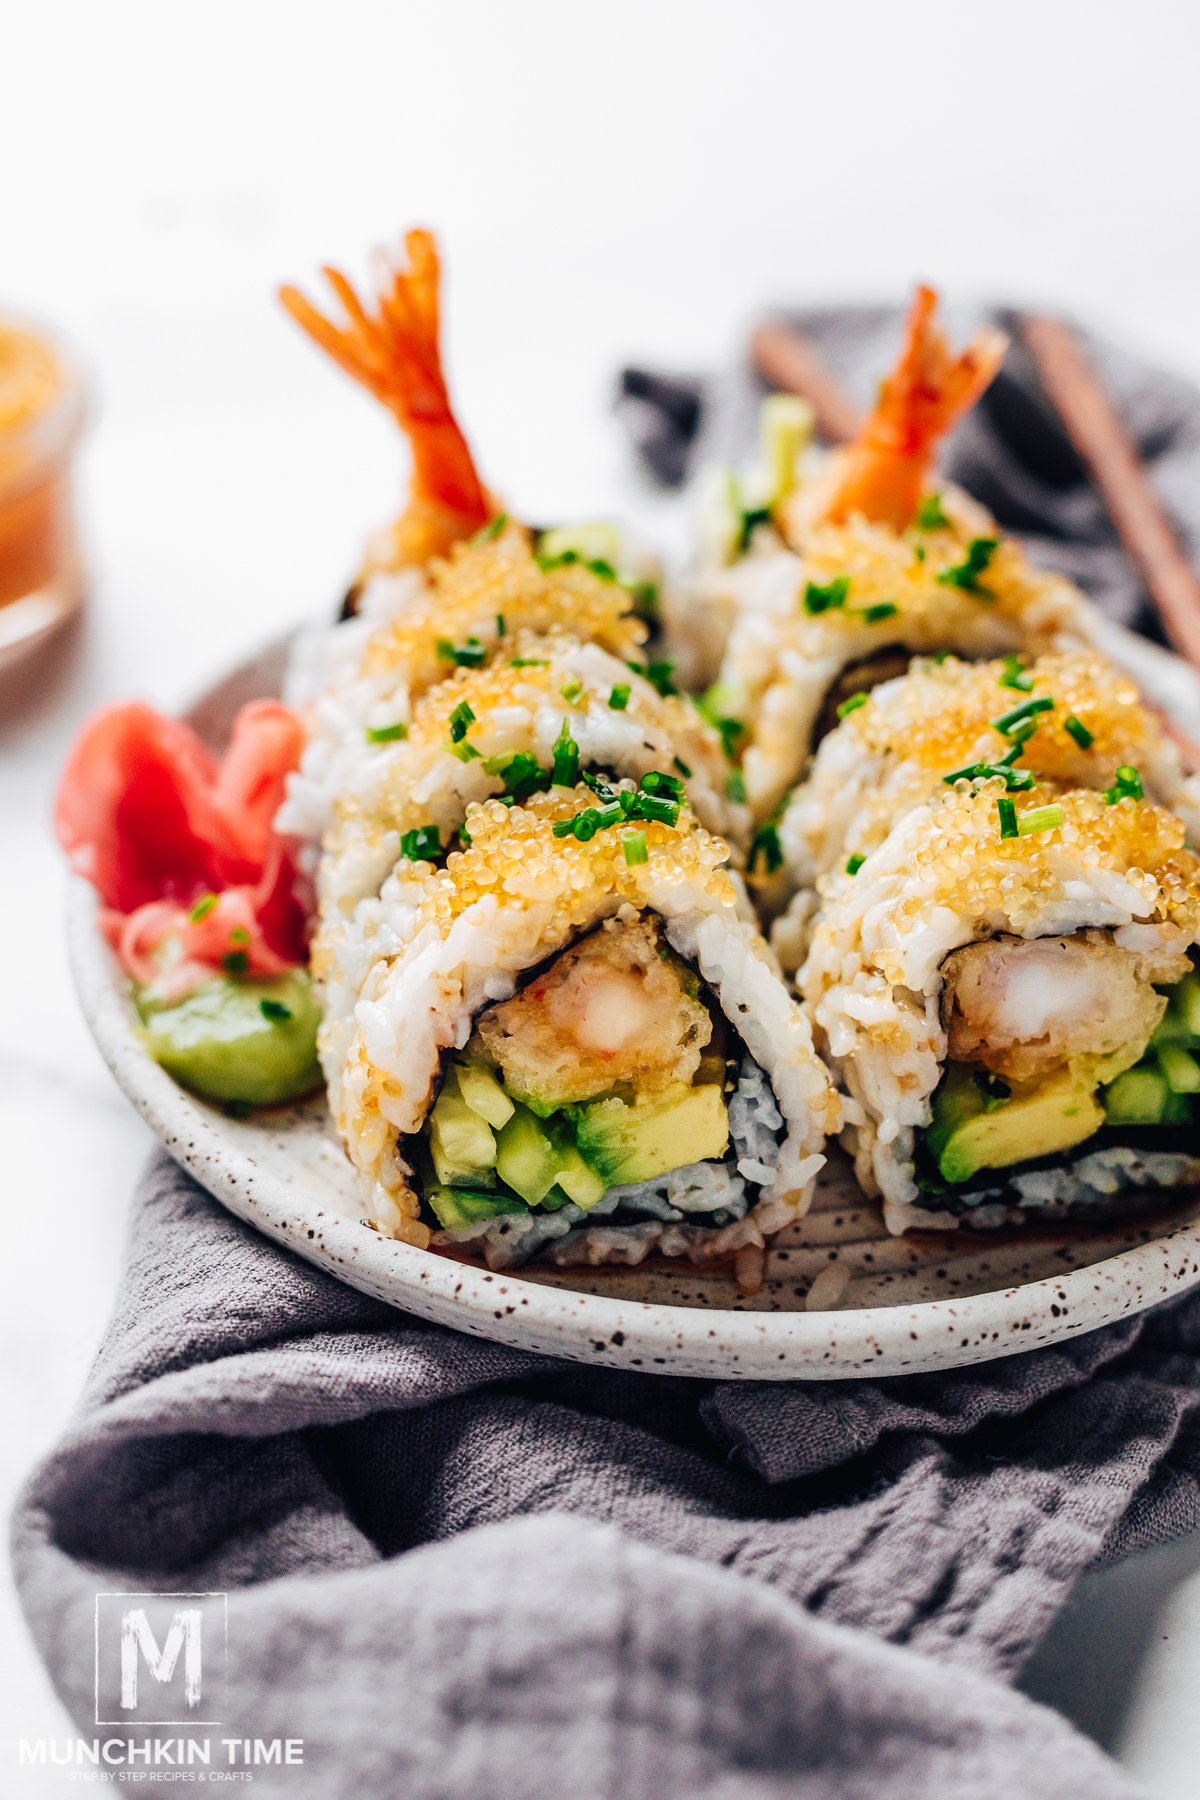 https://www.munchkintime.com/wp-content/uploads/2021/03/Munchkin-Time-Shrimp-Tempura-Sushi-Recipe-22.jpg